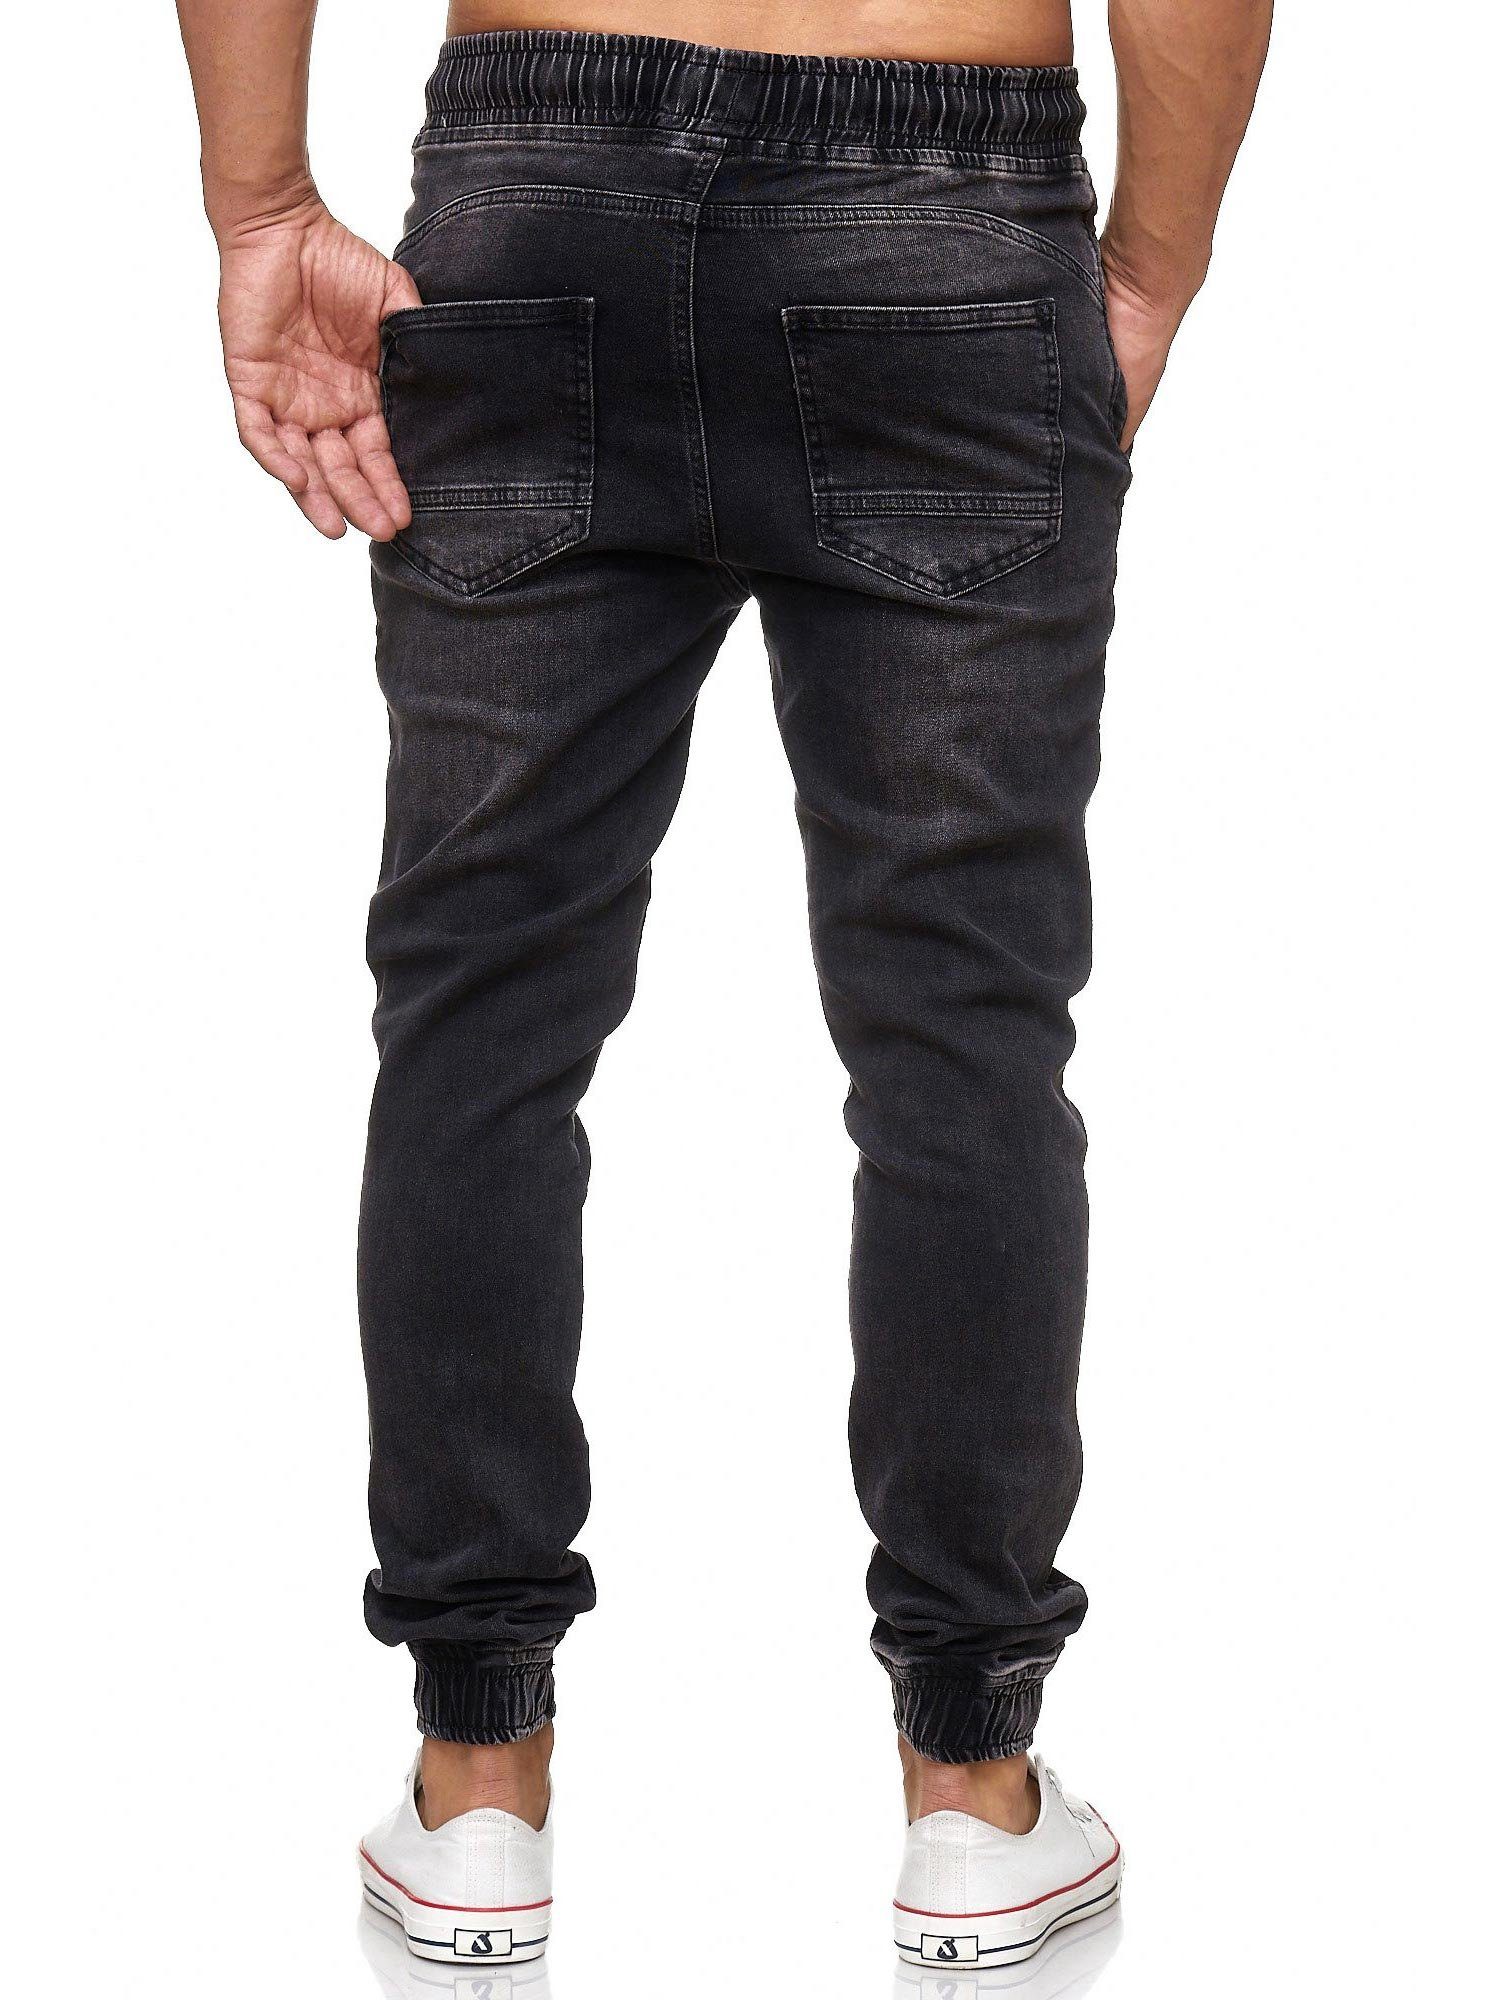 Tazzio Straight-Jeans 17504 Sweat im schwarz Jogger-Stil Hose